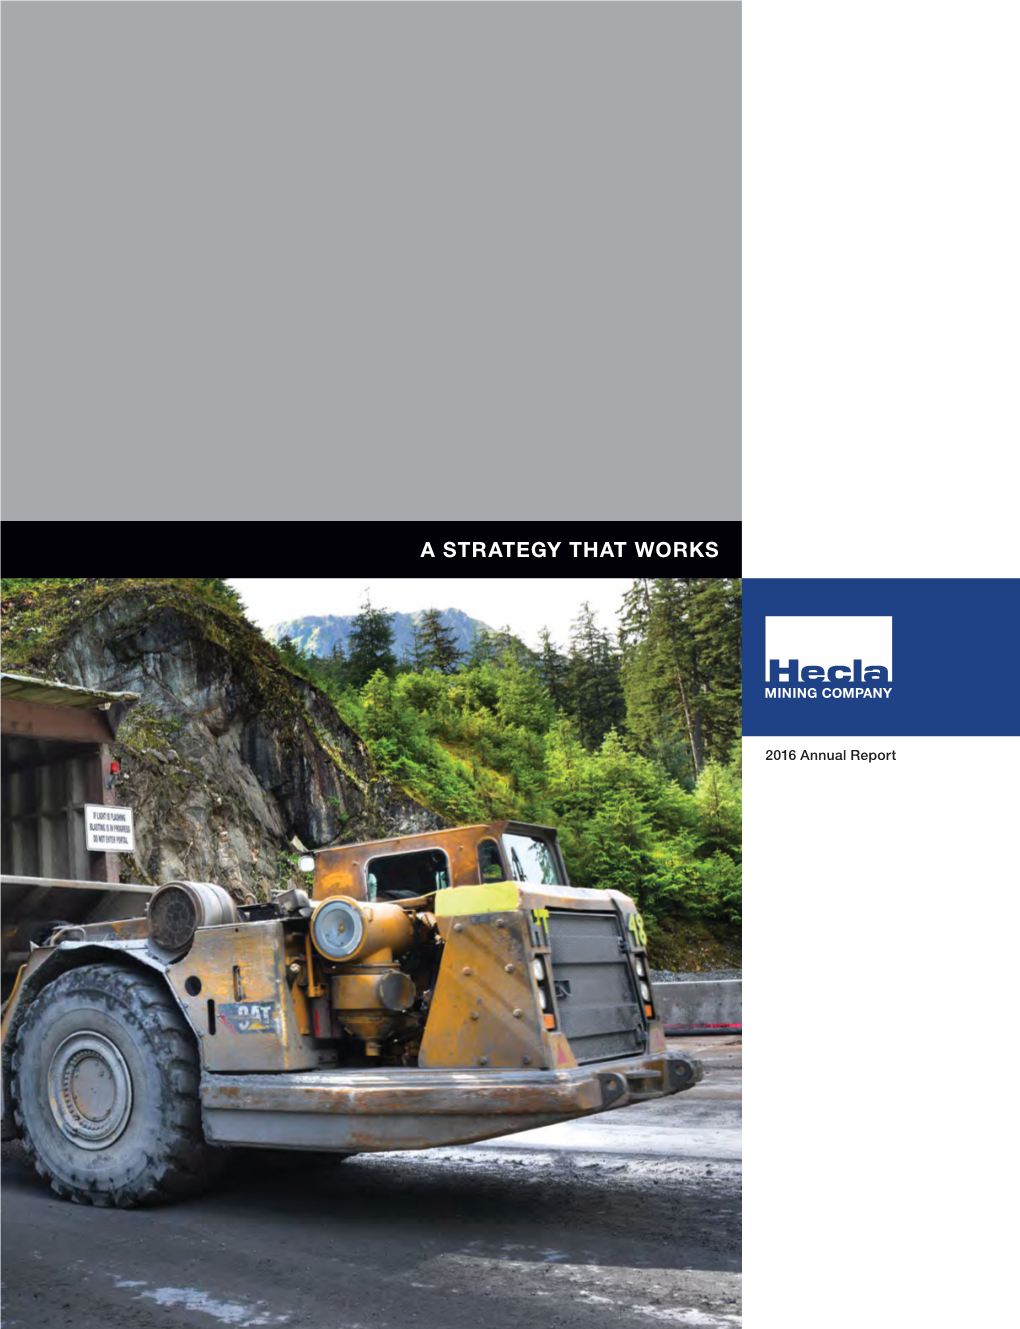 Hecla Mining Company 2016 Annual Report